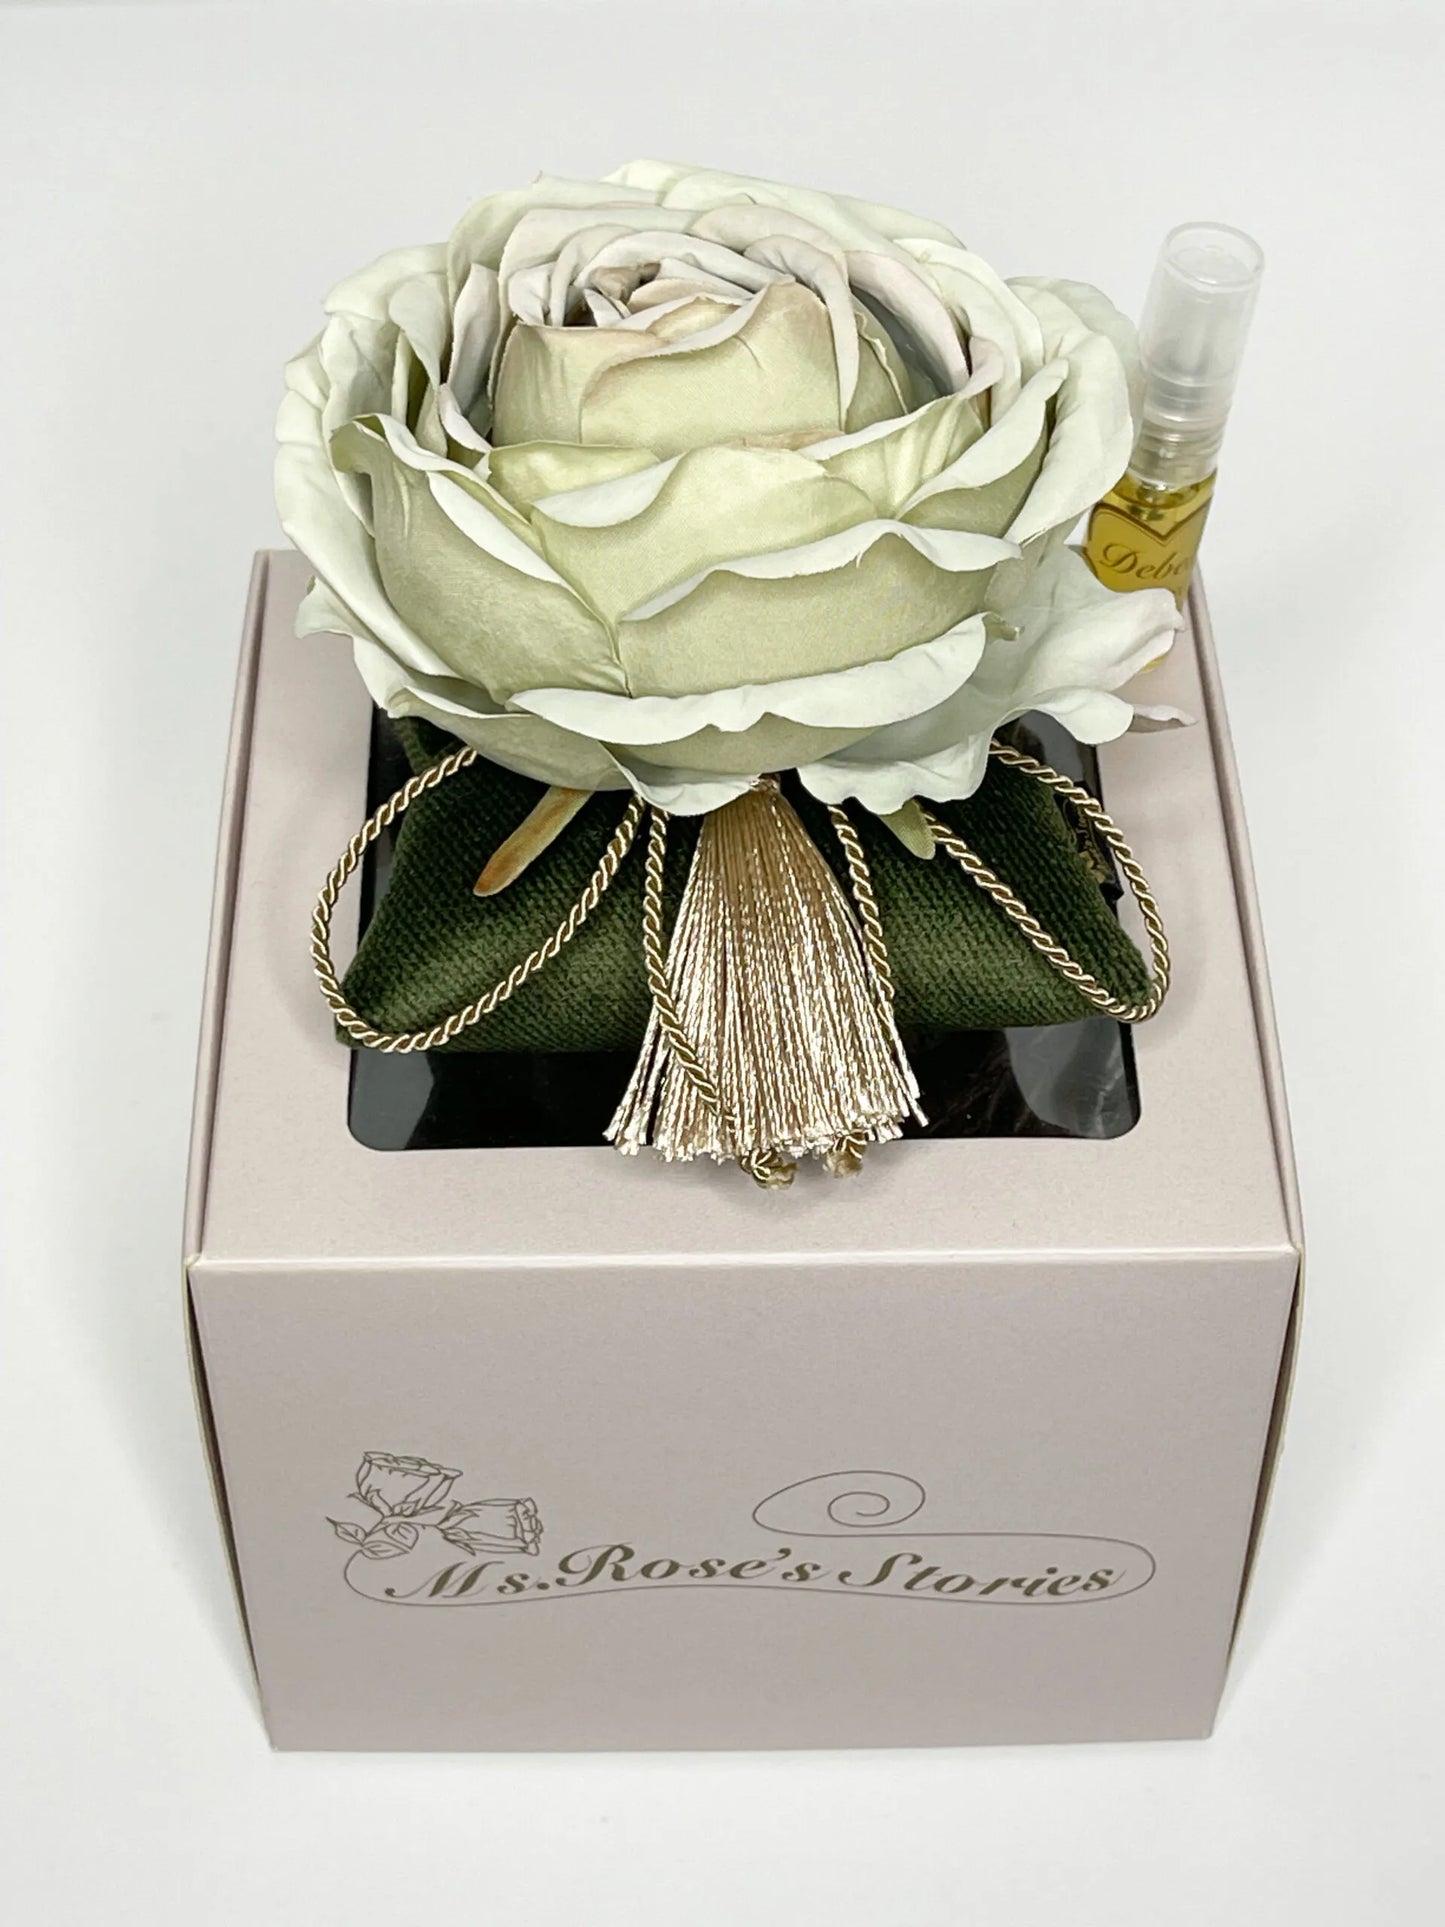 Home fragrance "Green rose"